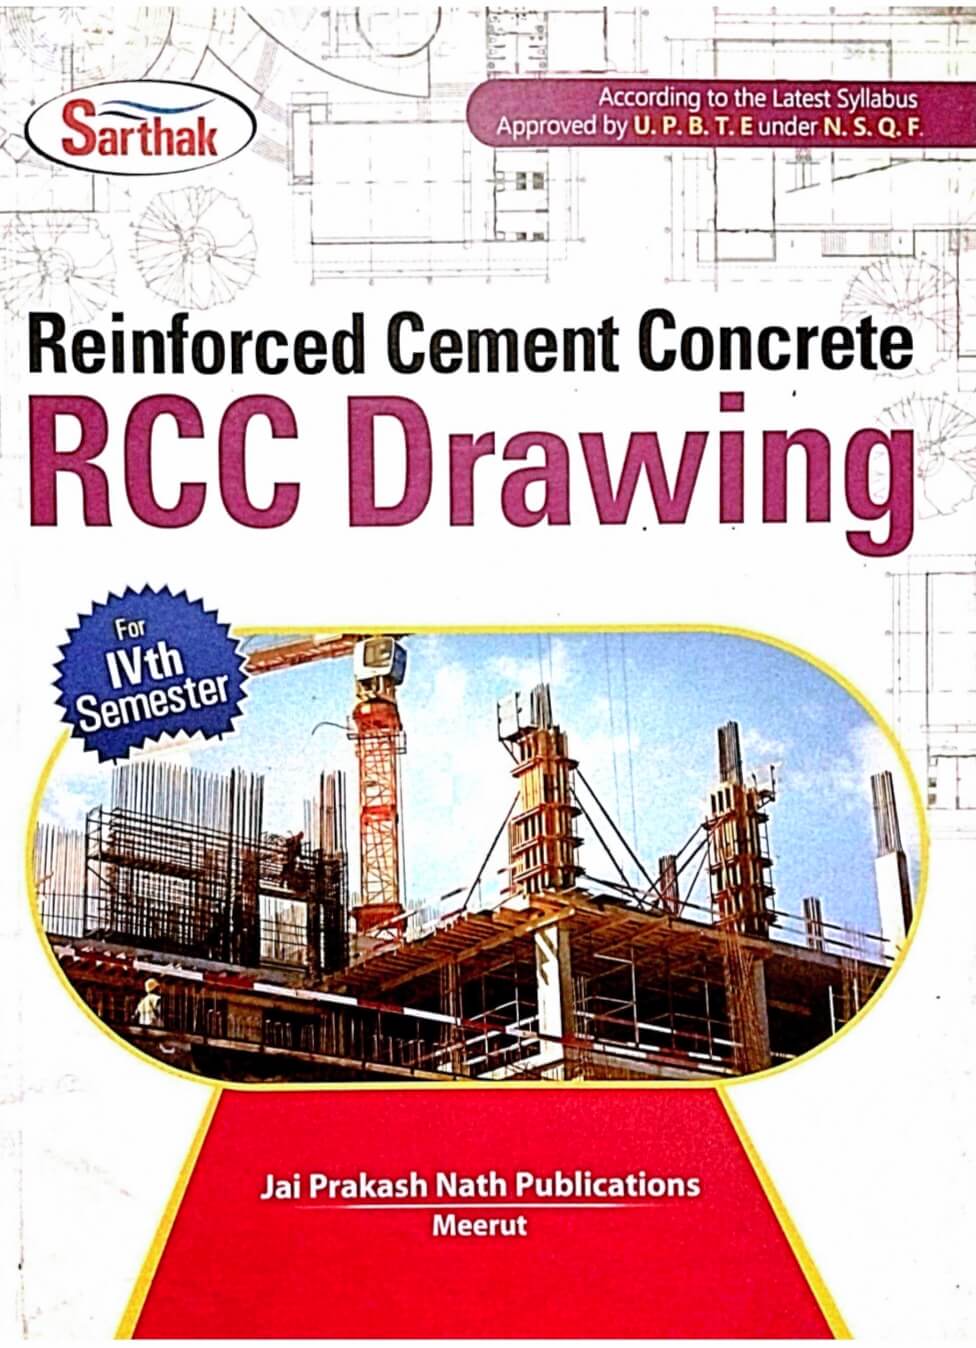 Rcc drawing book pdf